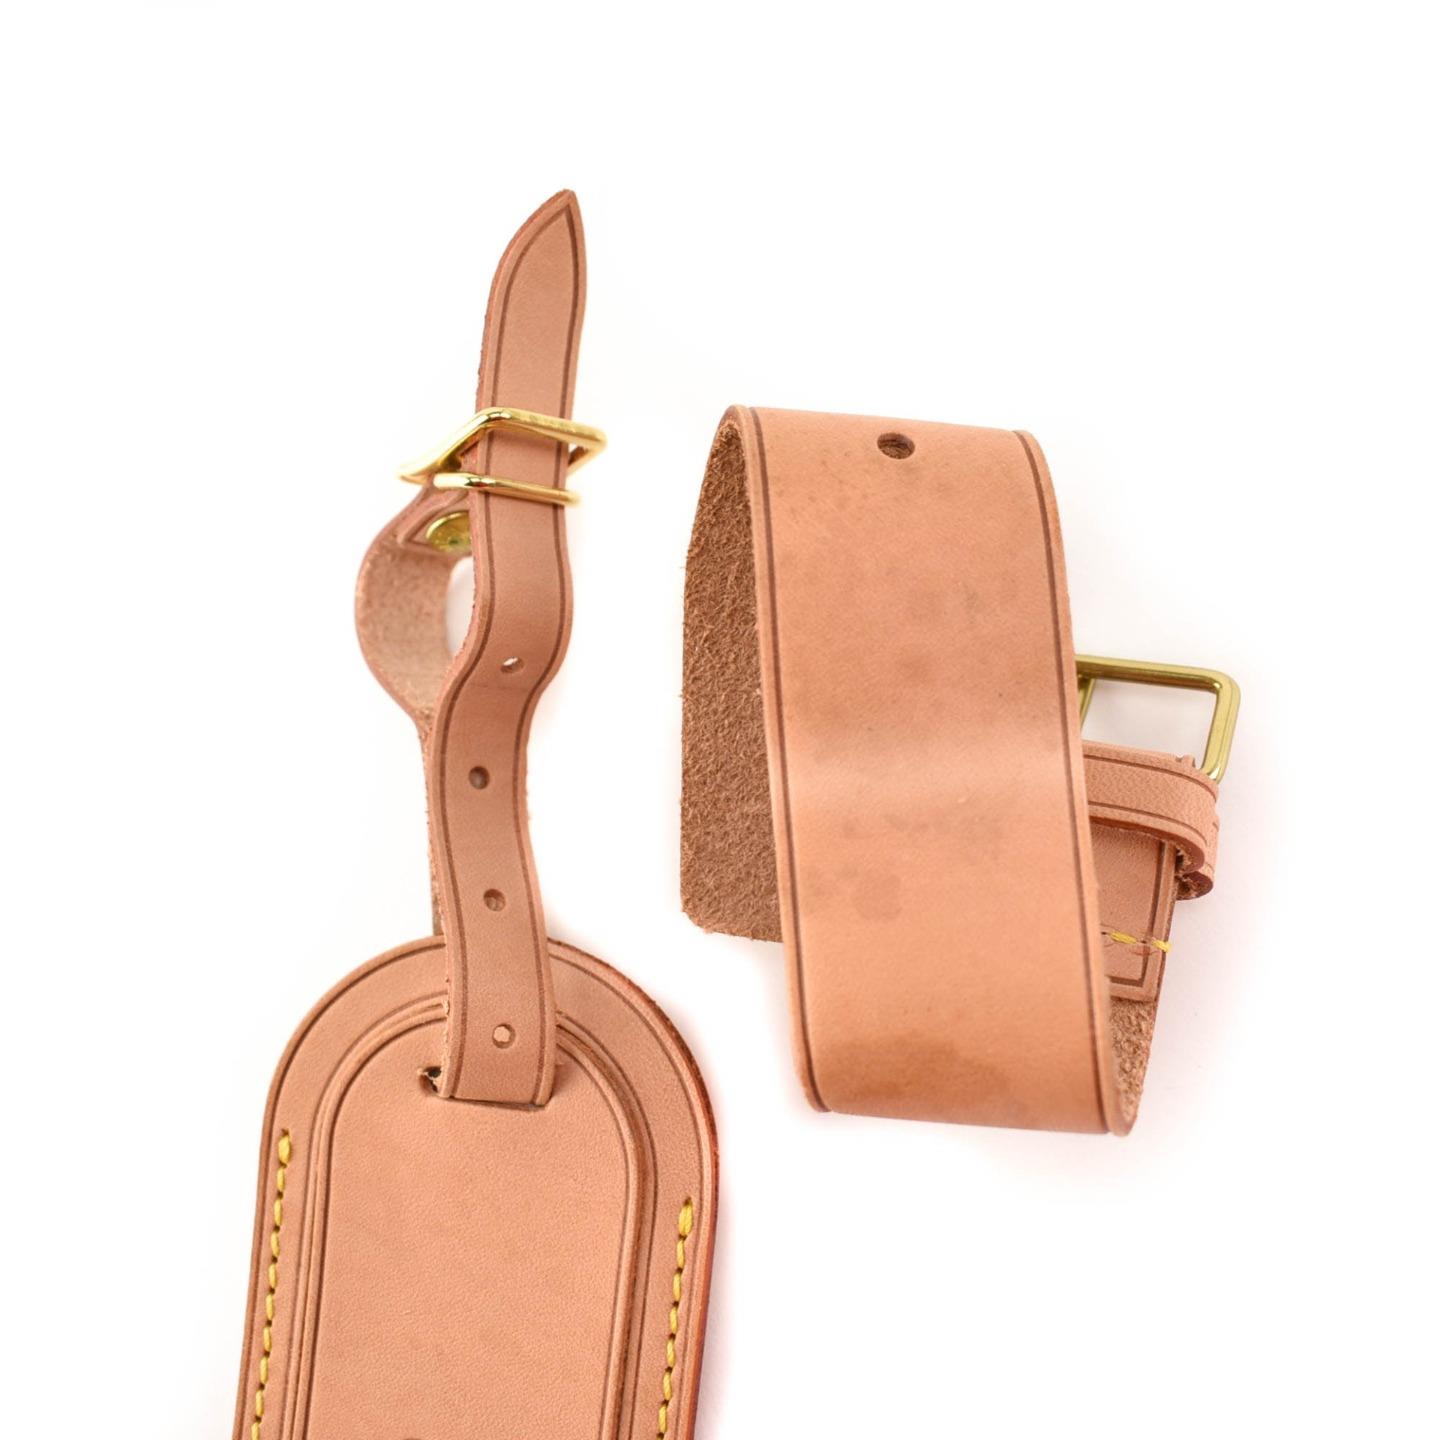 LOUIS VUITTON: Tan, Vachetta Leather Luggage Tag & Keepall Set (oo) | eBay